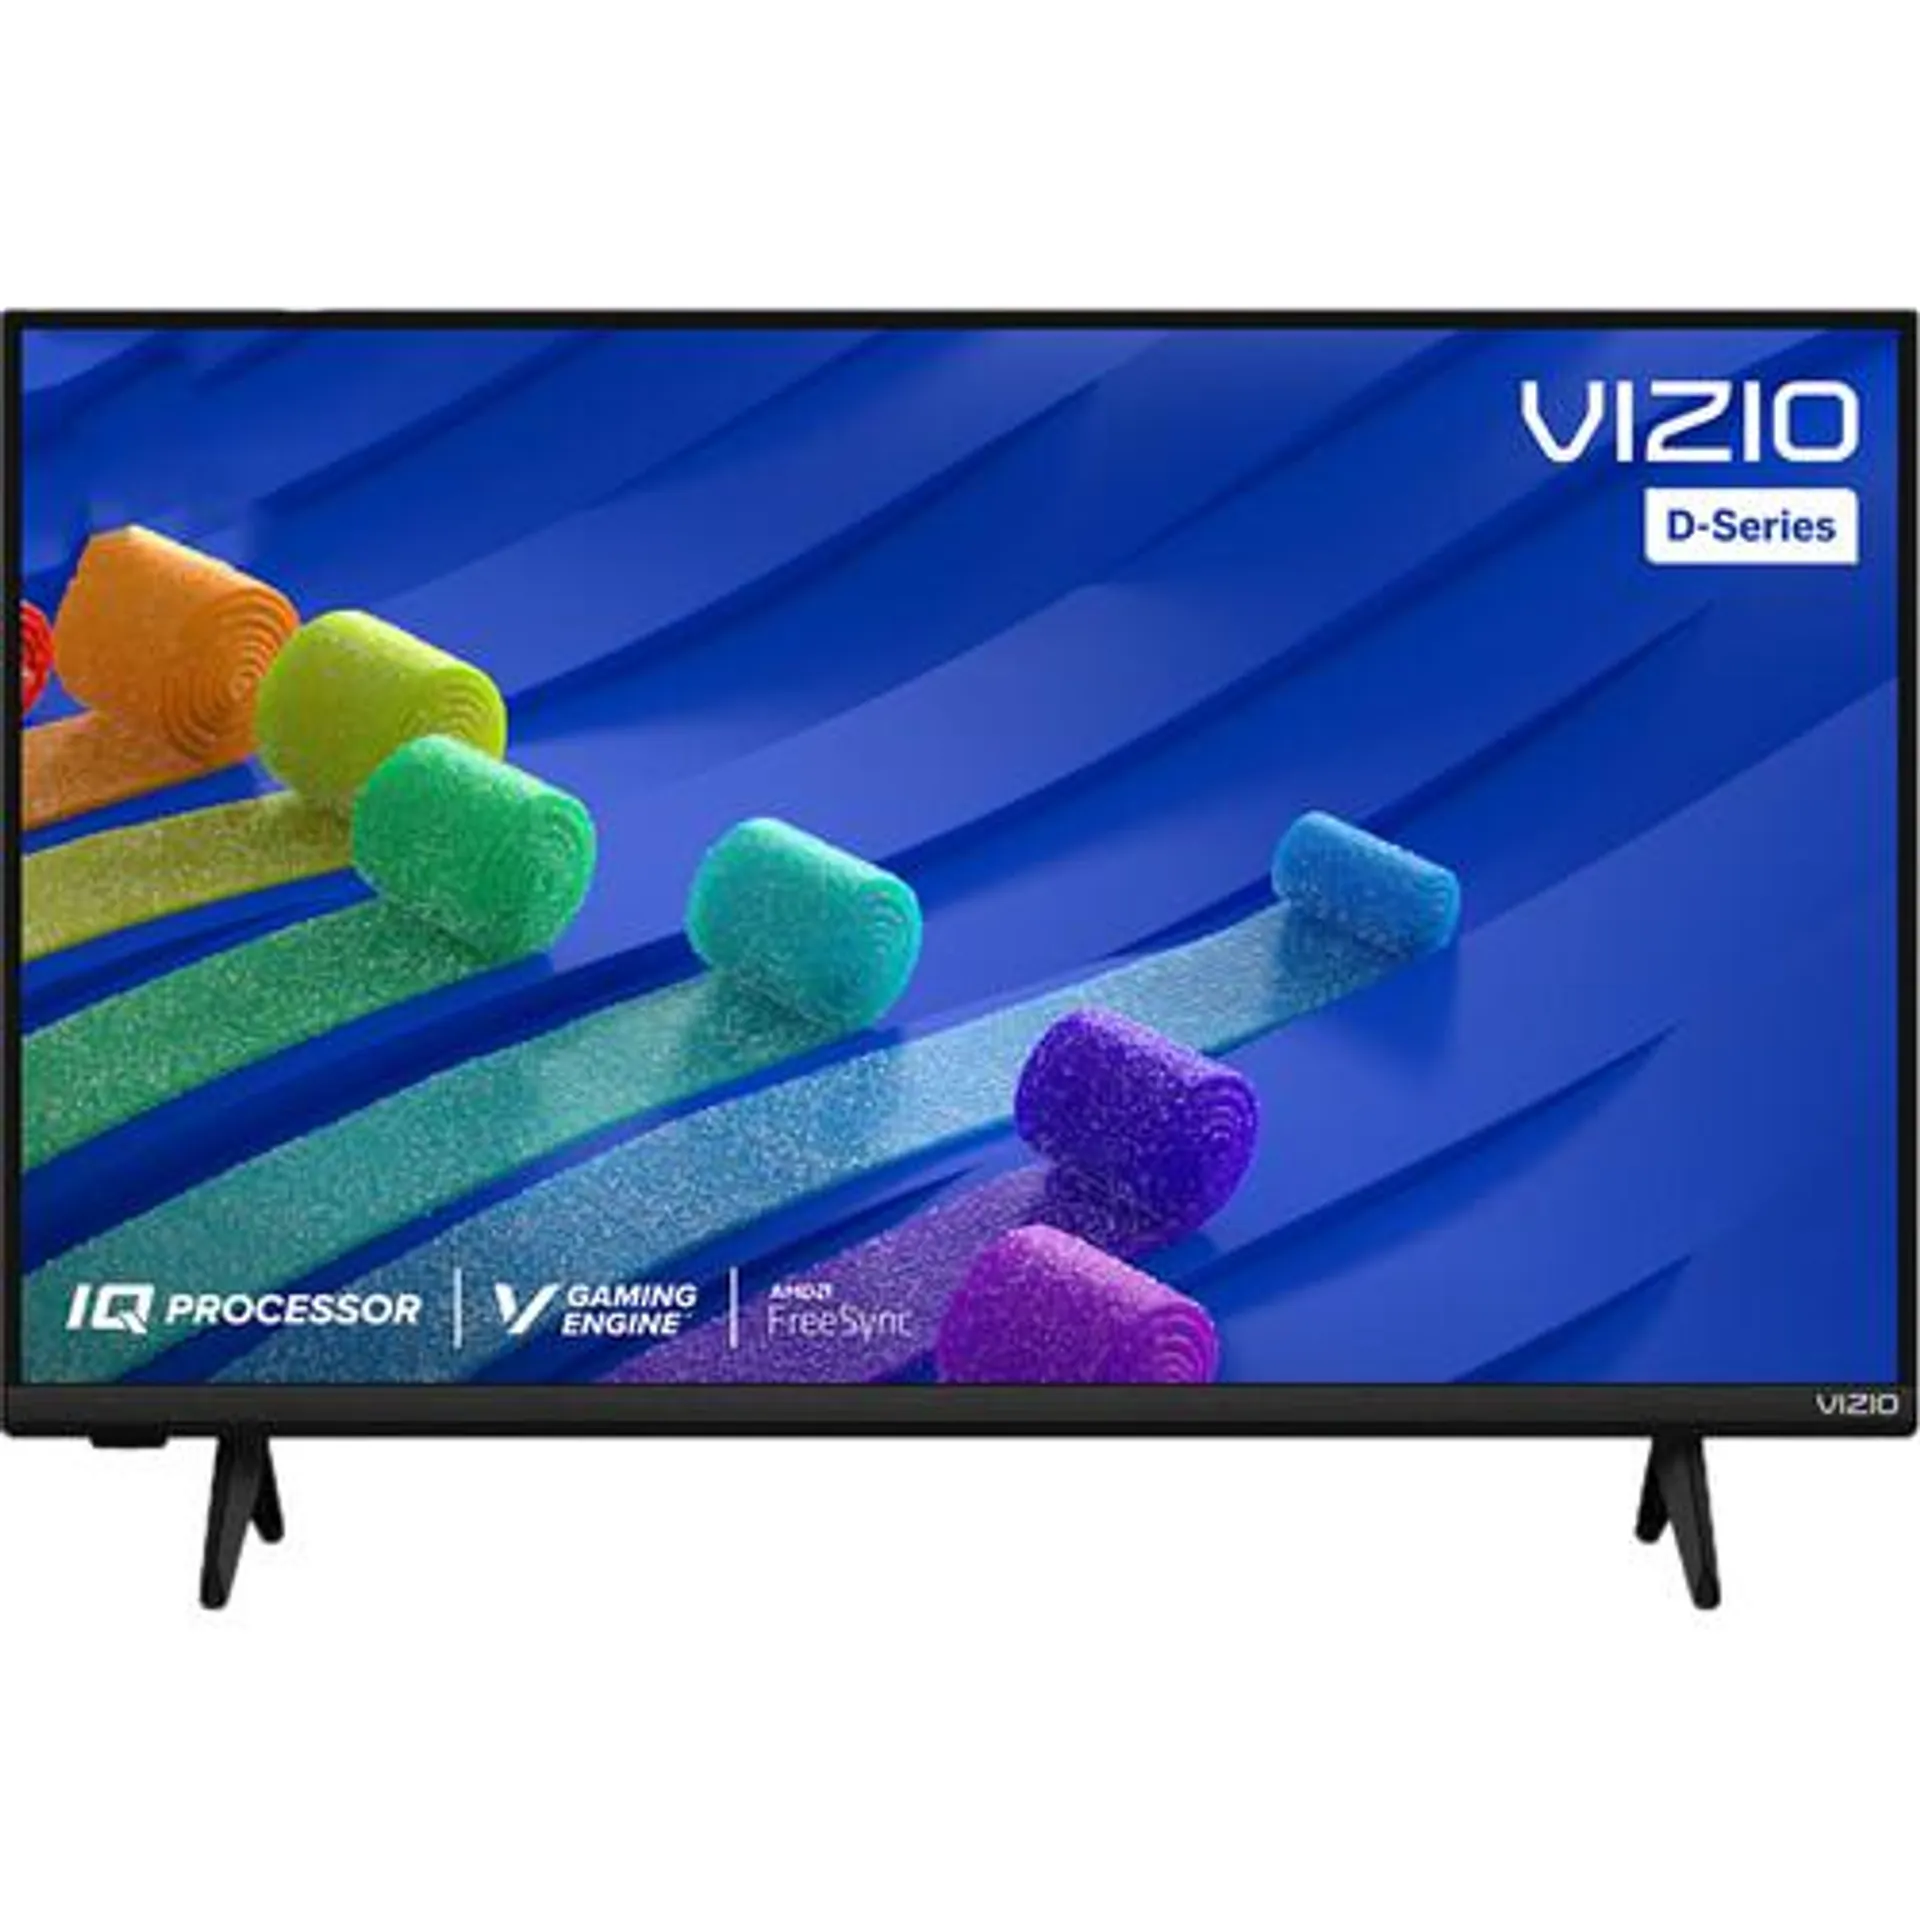 VIZIO D-Series D32F4-J04 32" Class Full HD Smart LED TV